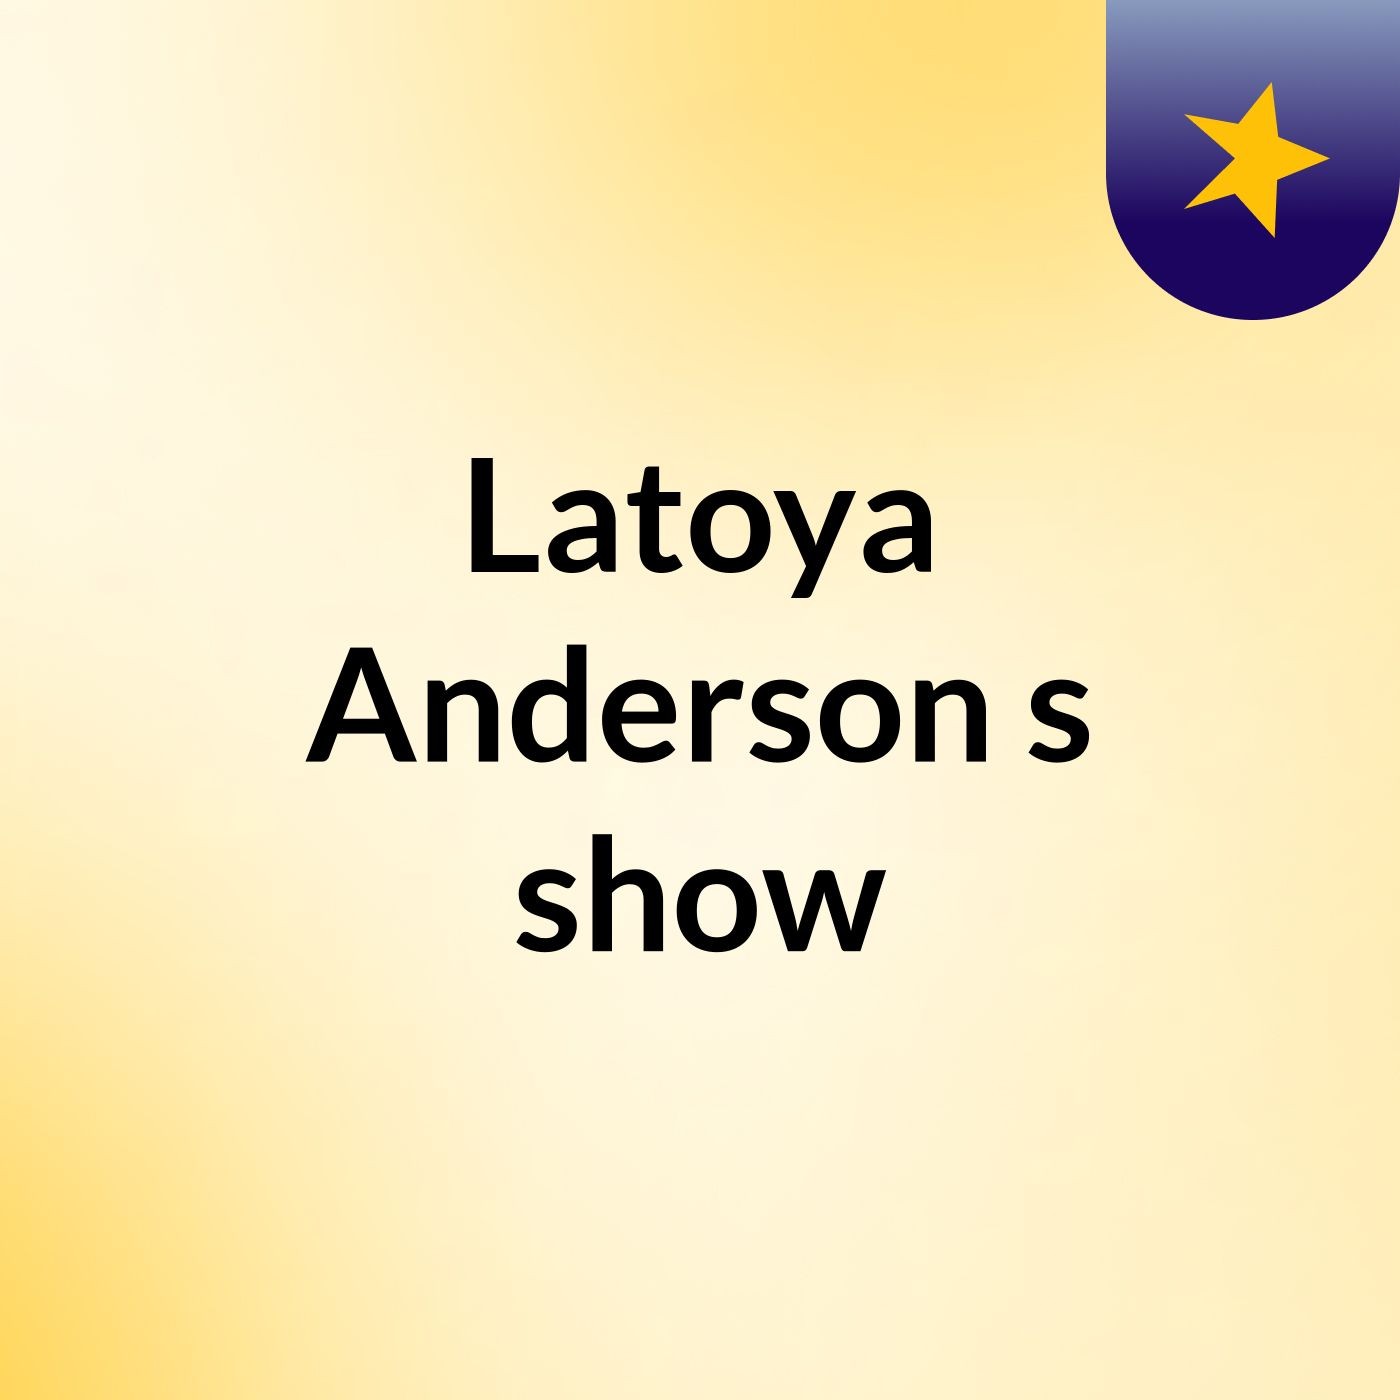 Latoya Anderson's show